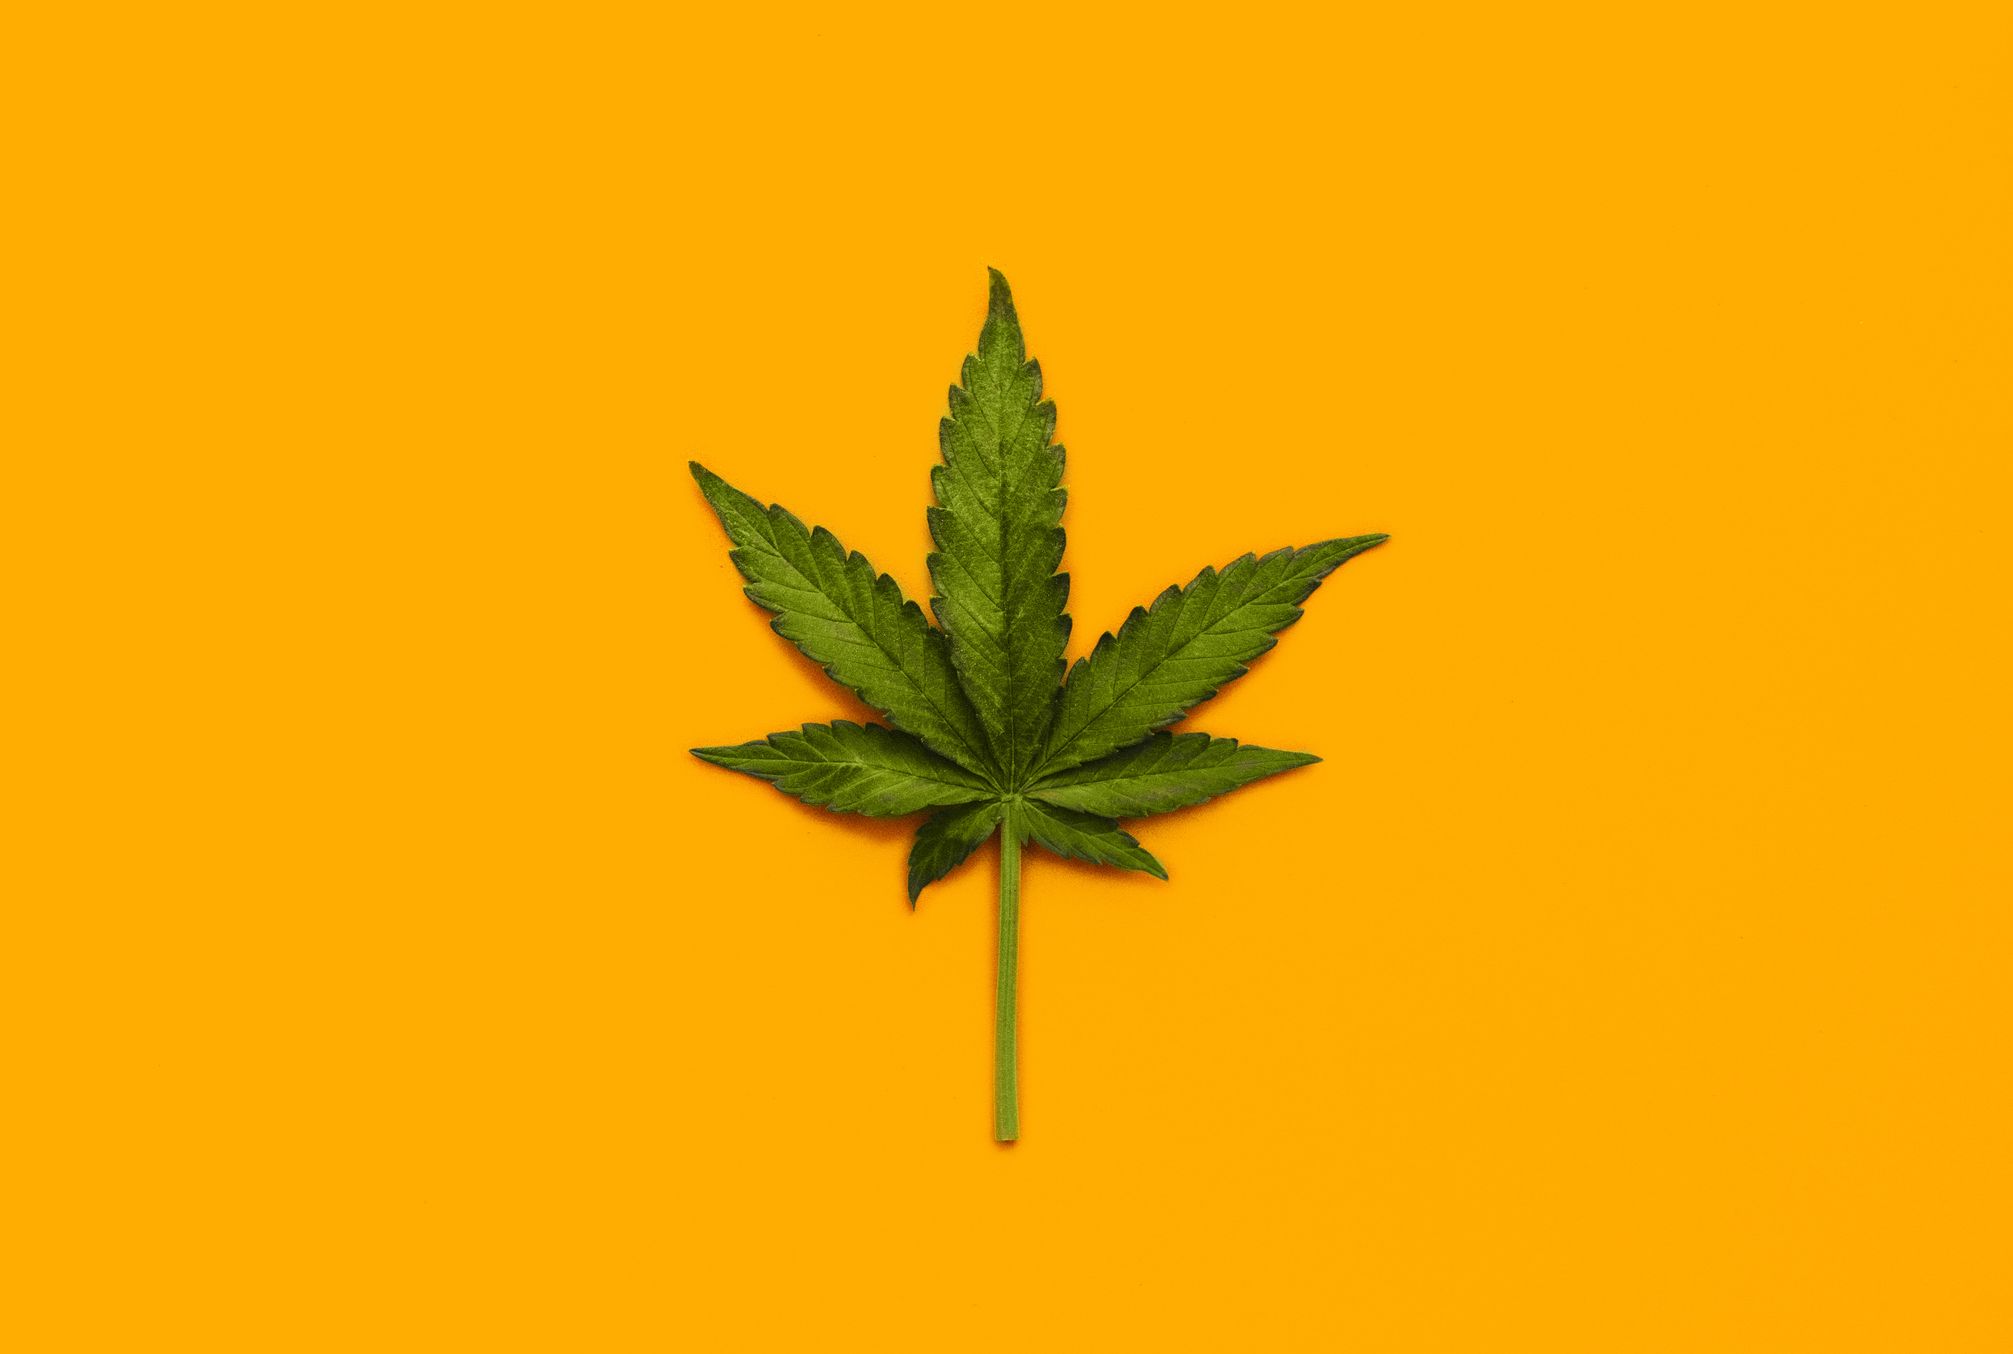 Marijuana Leaf over yellow background